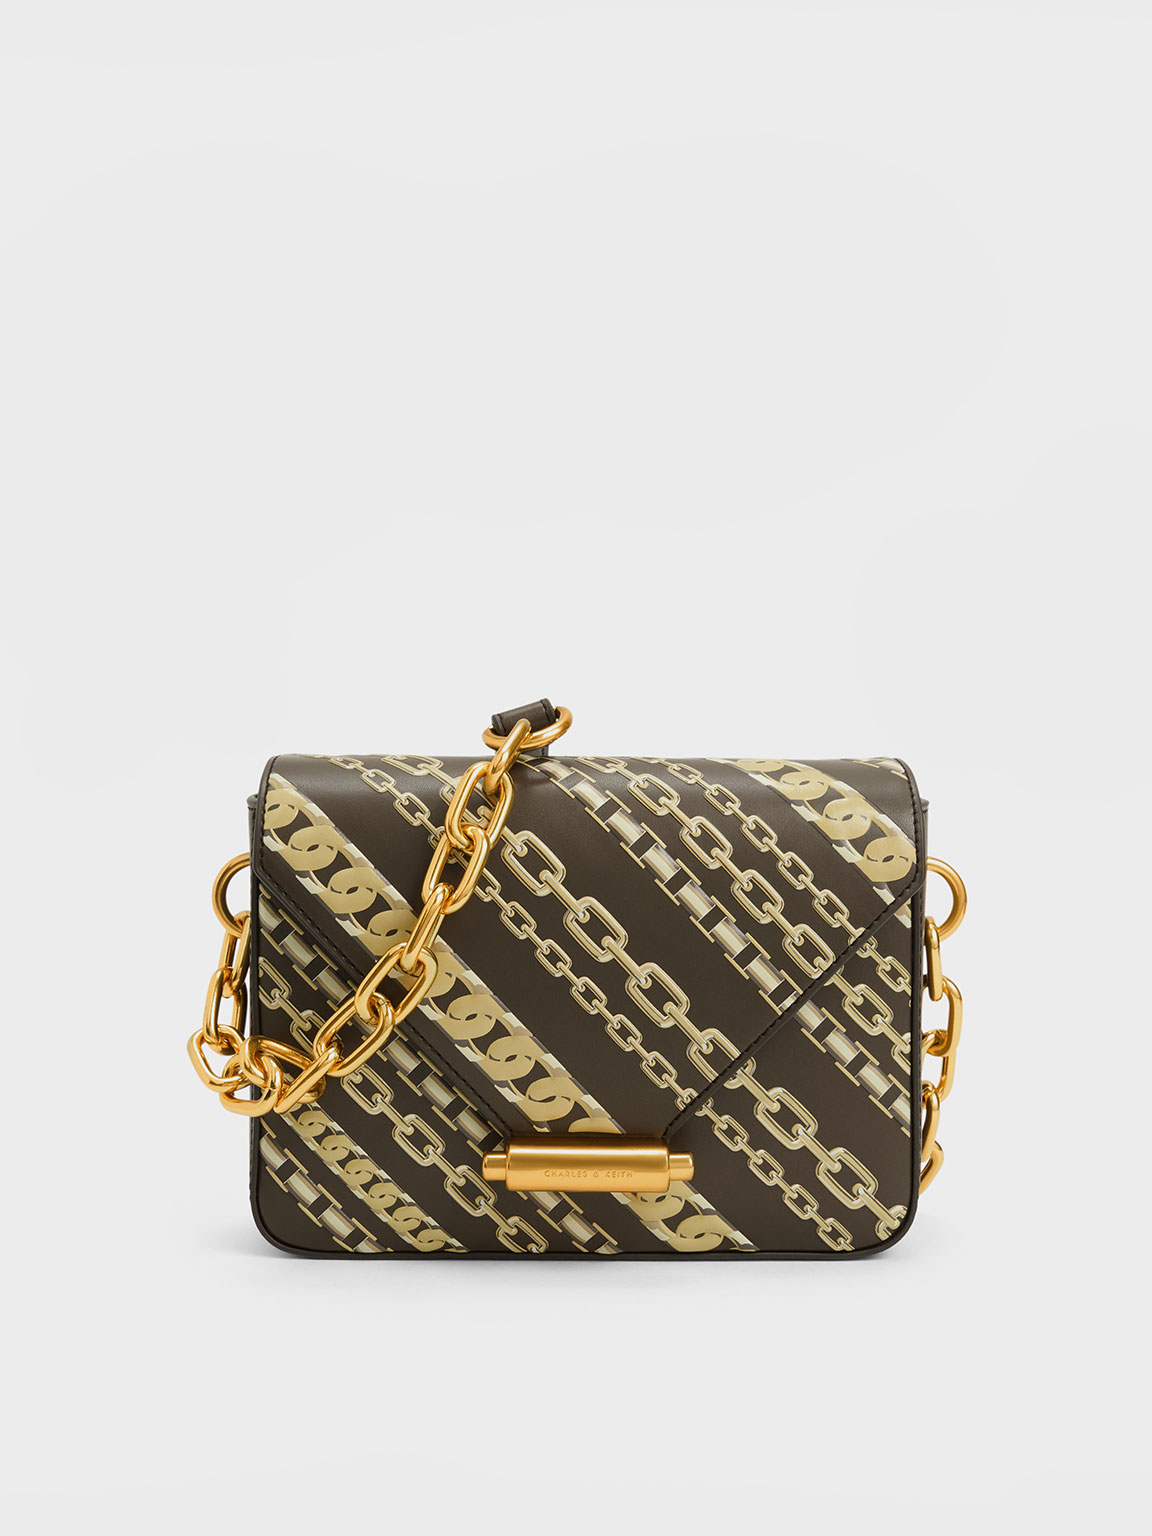 Louis Vuitton Bag Lock Key Hanger Hobo Bags for Women